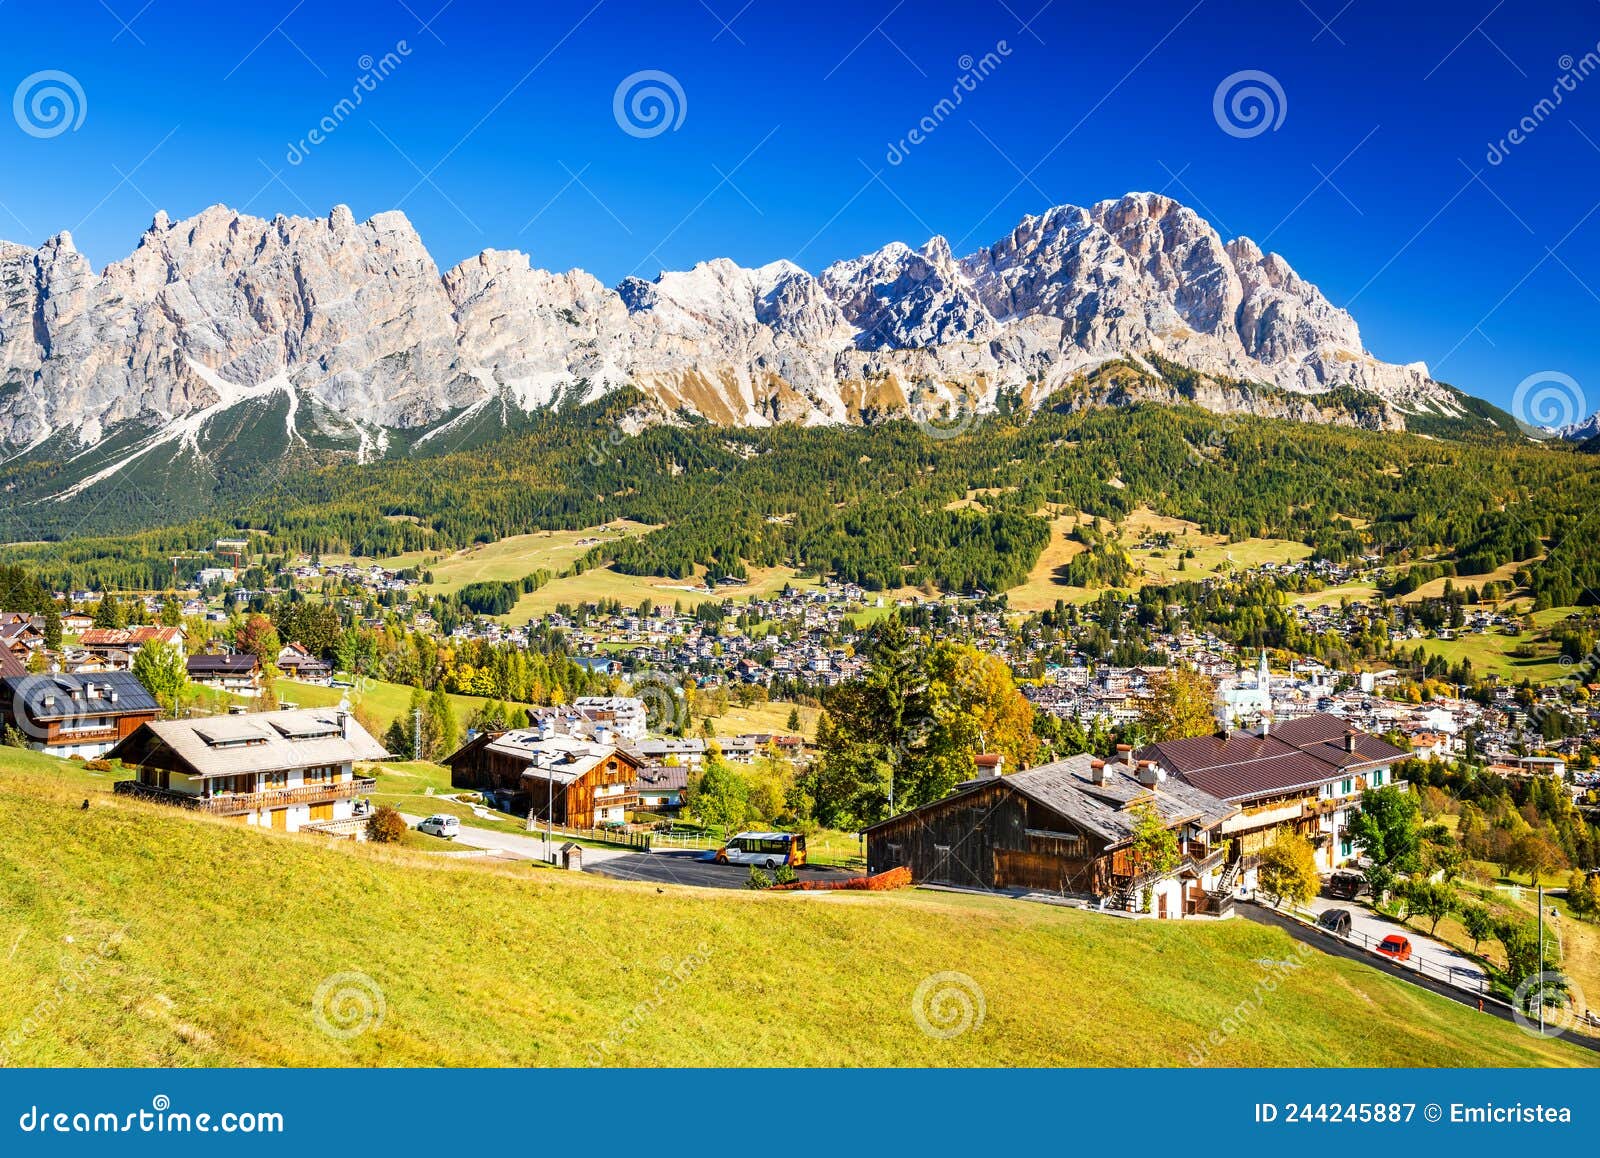 cortina d`ampezzo, italy - sesto dolomites mountain range, alps in south tyrol